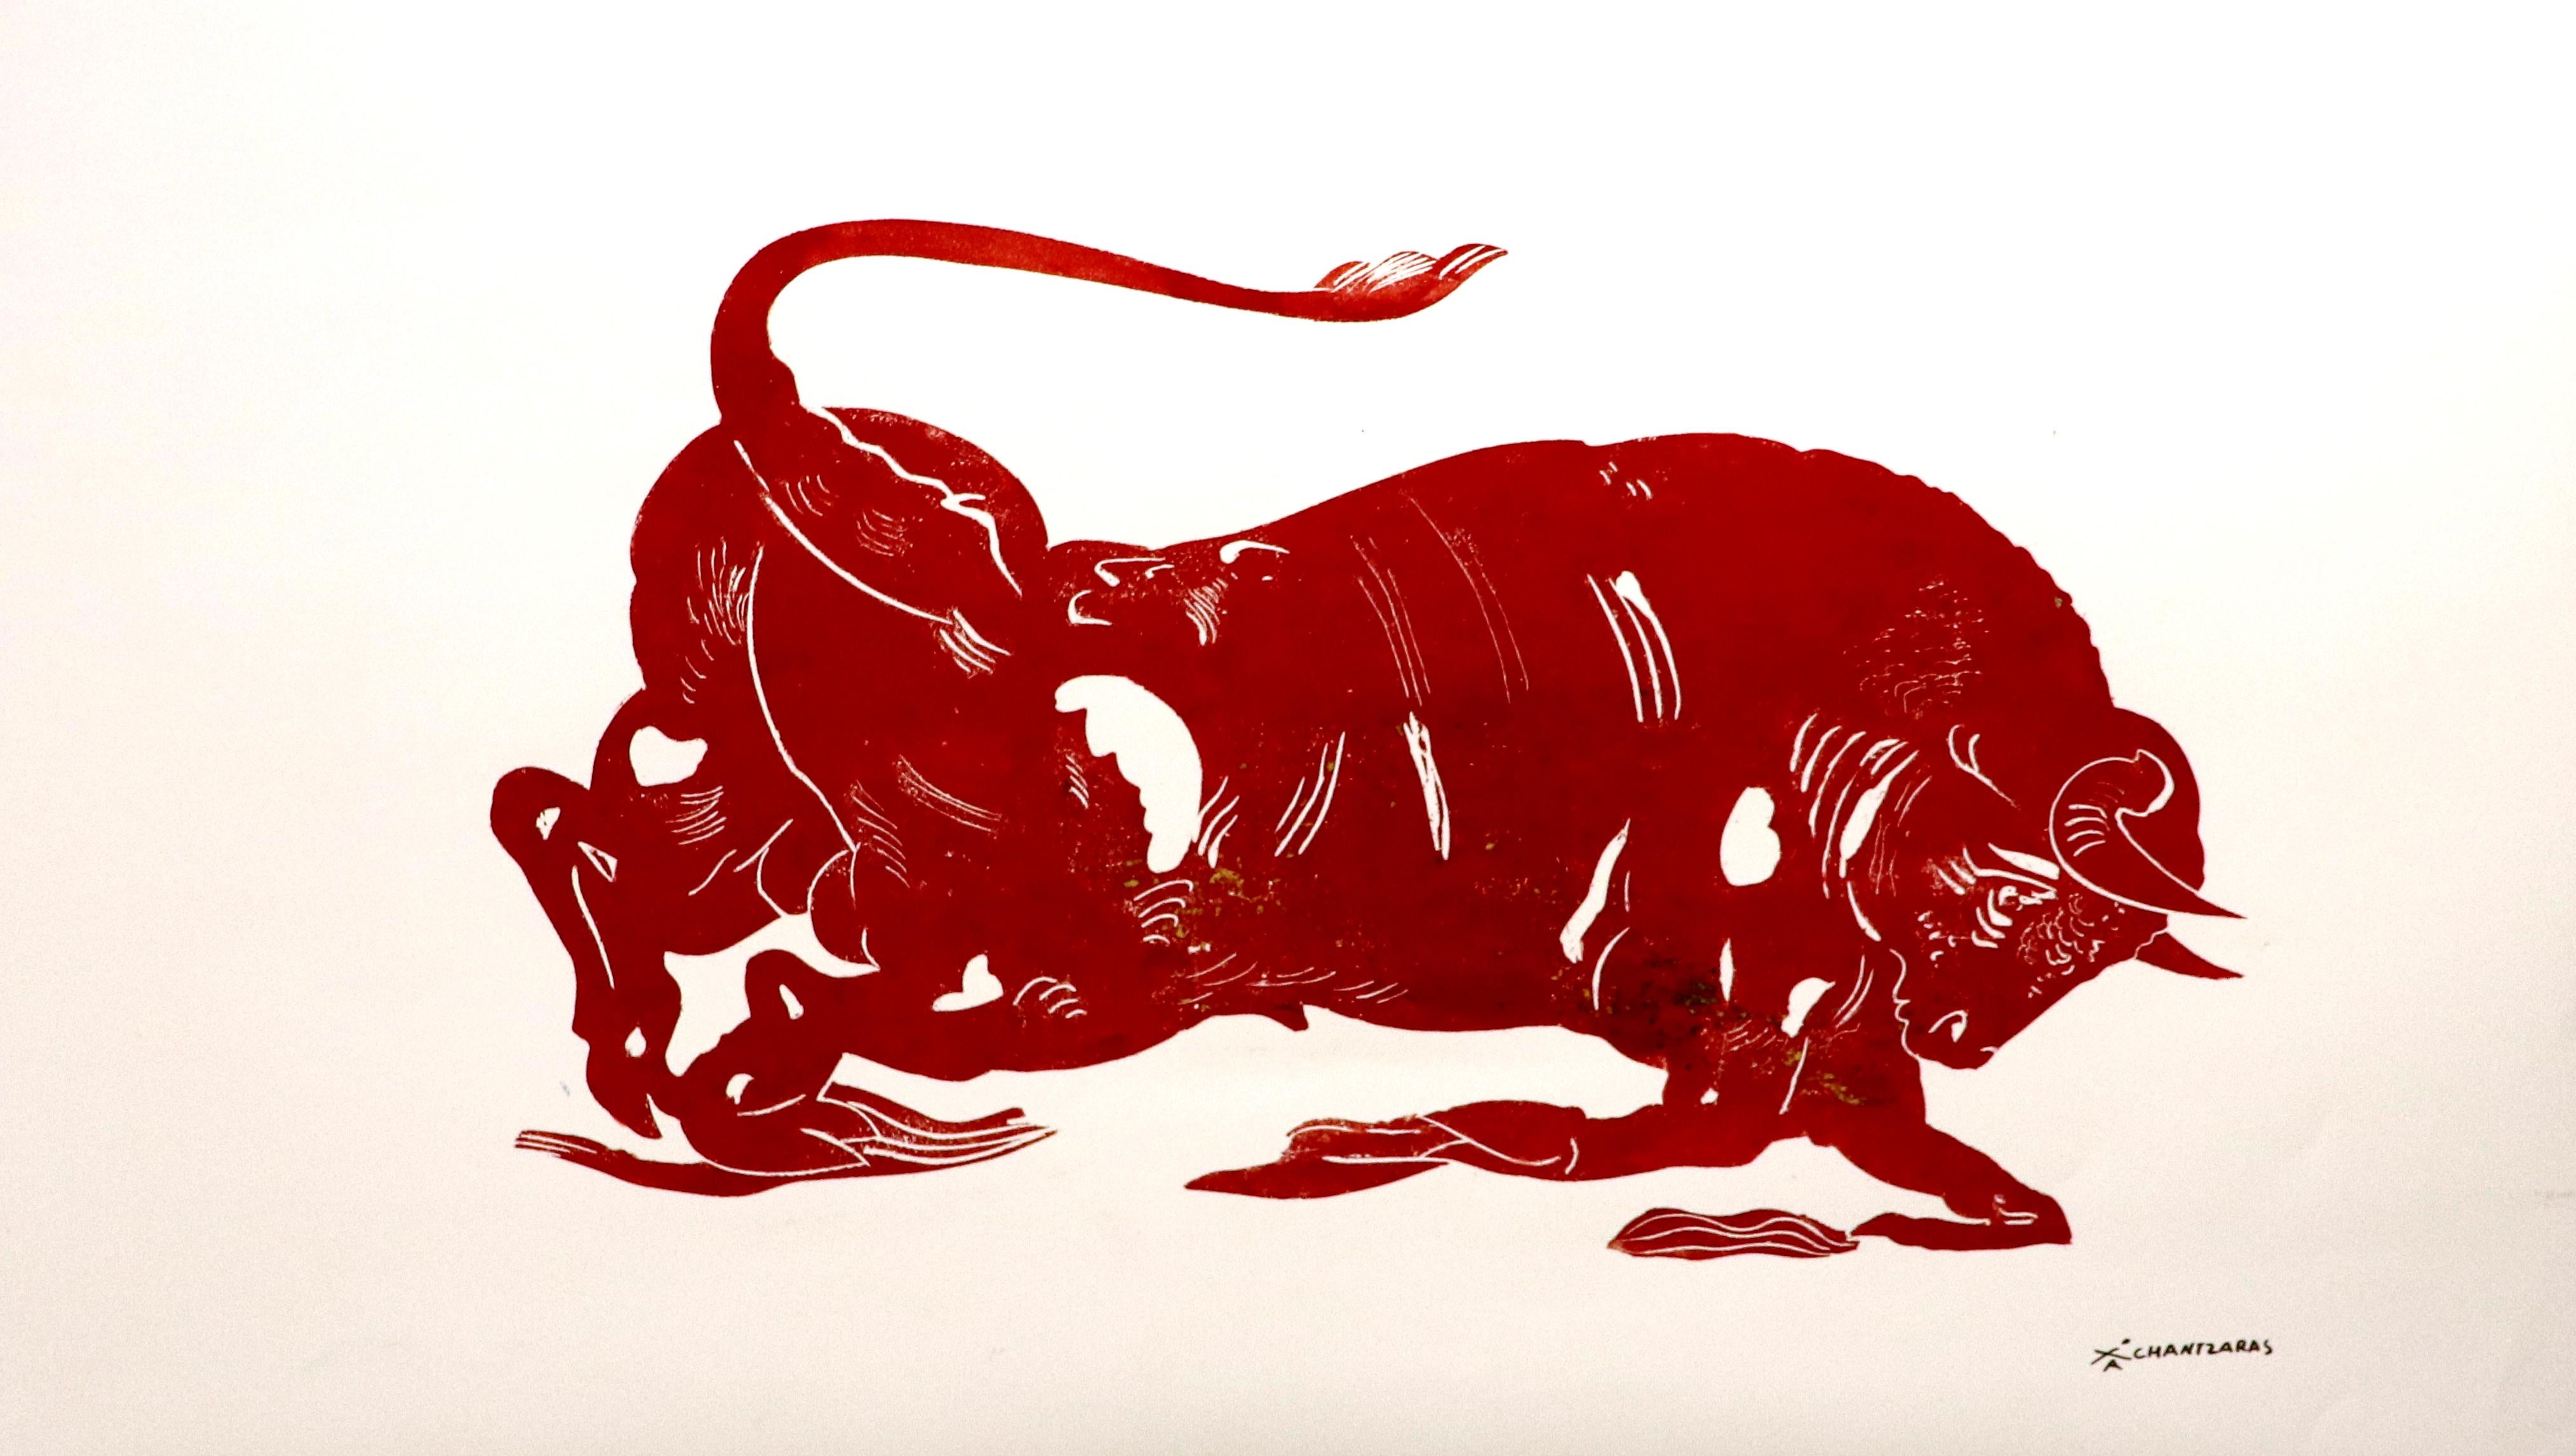 Apostolos Chantzaras Figurative Painting - El Toro, Mythological animal, strong red bull painting on paper